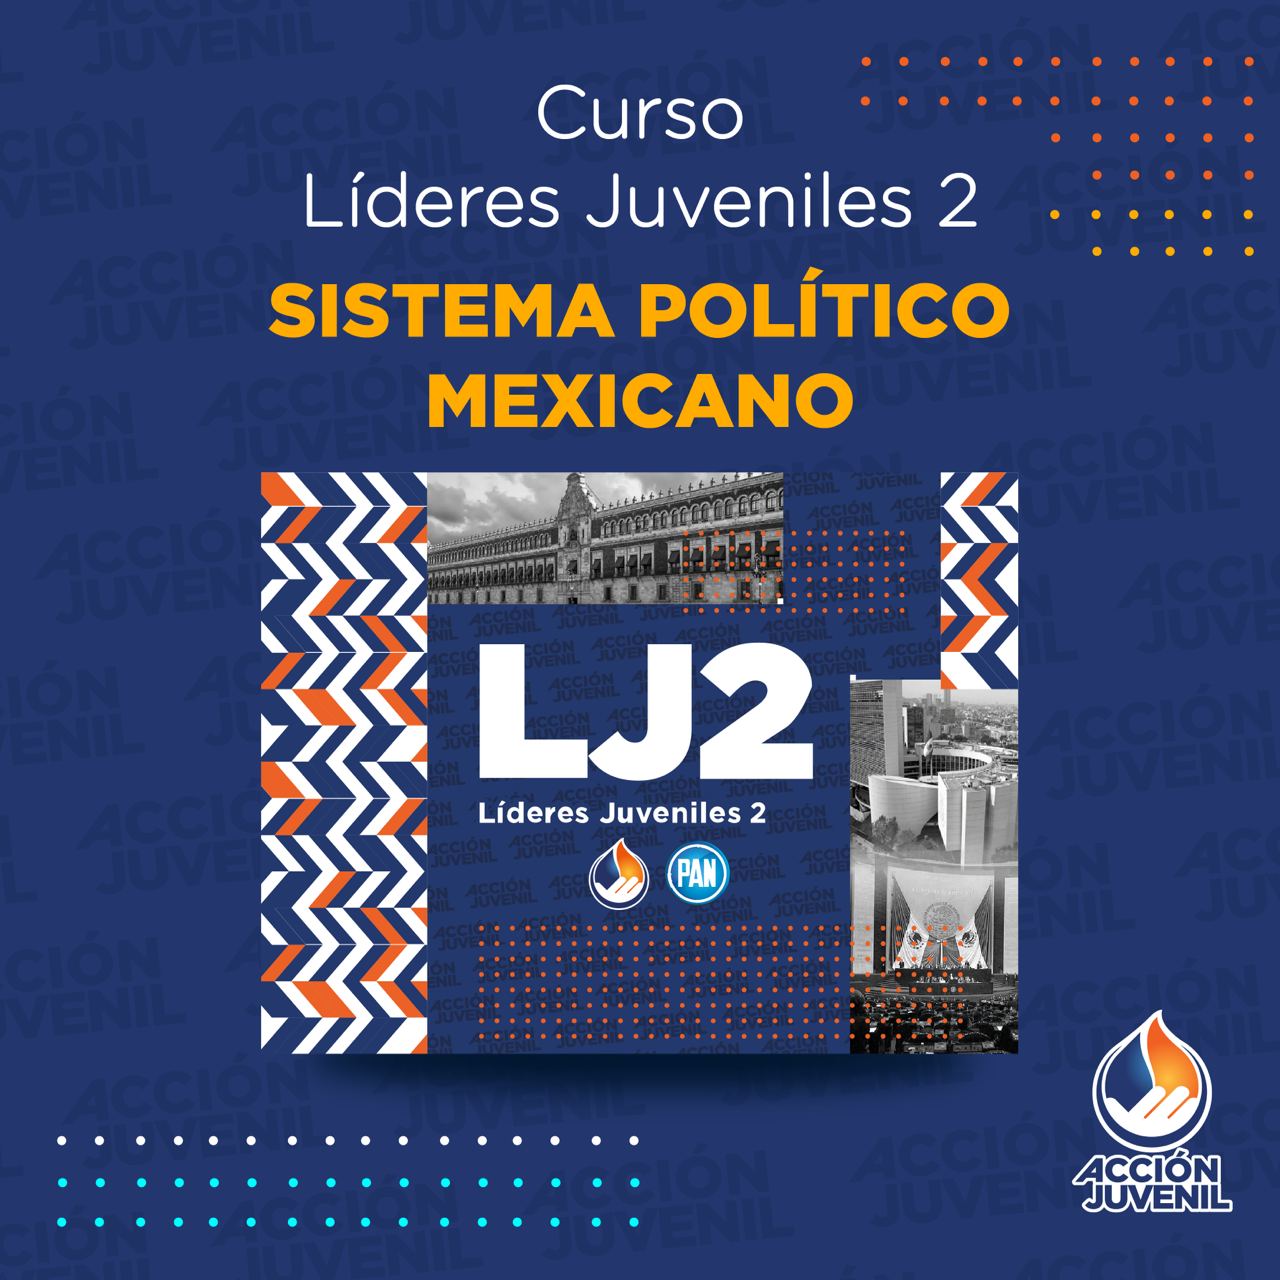 Curso Líderes Juveniles 2 Sistema Político Mexicano Chihuahua, CHH 19/11/22